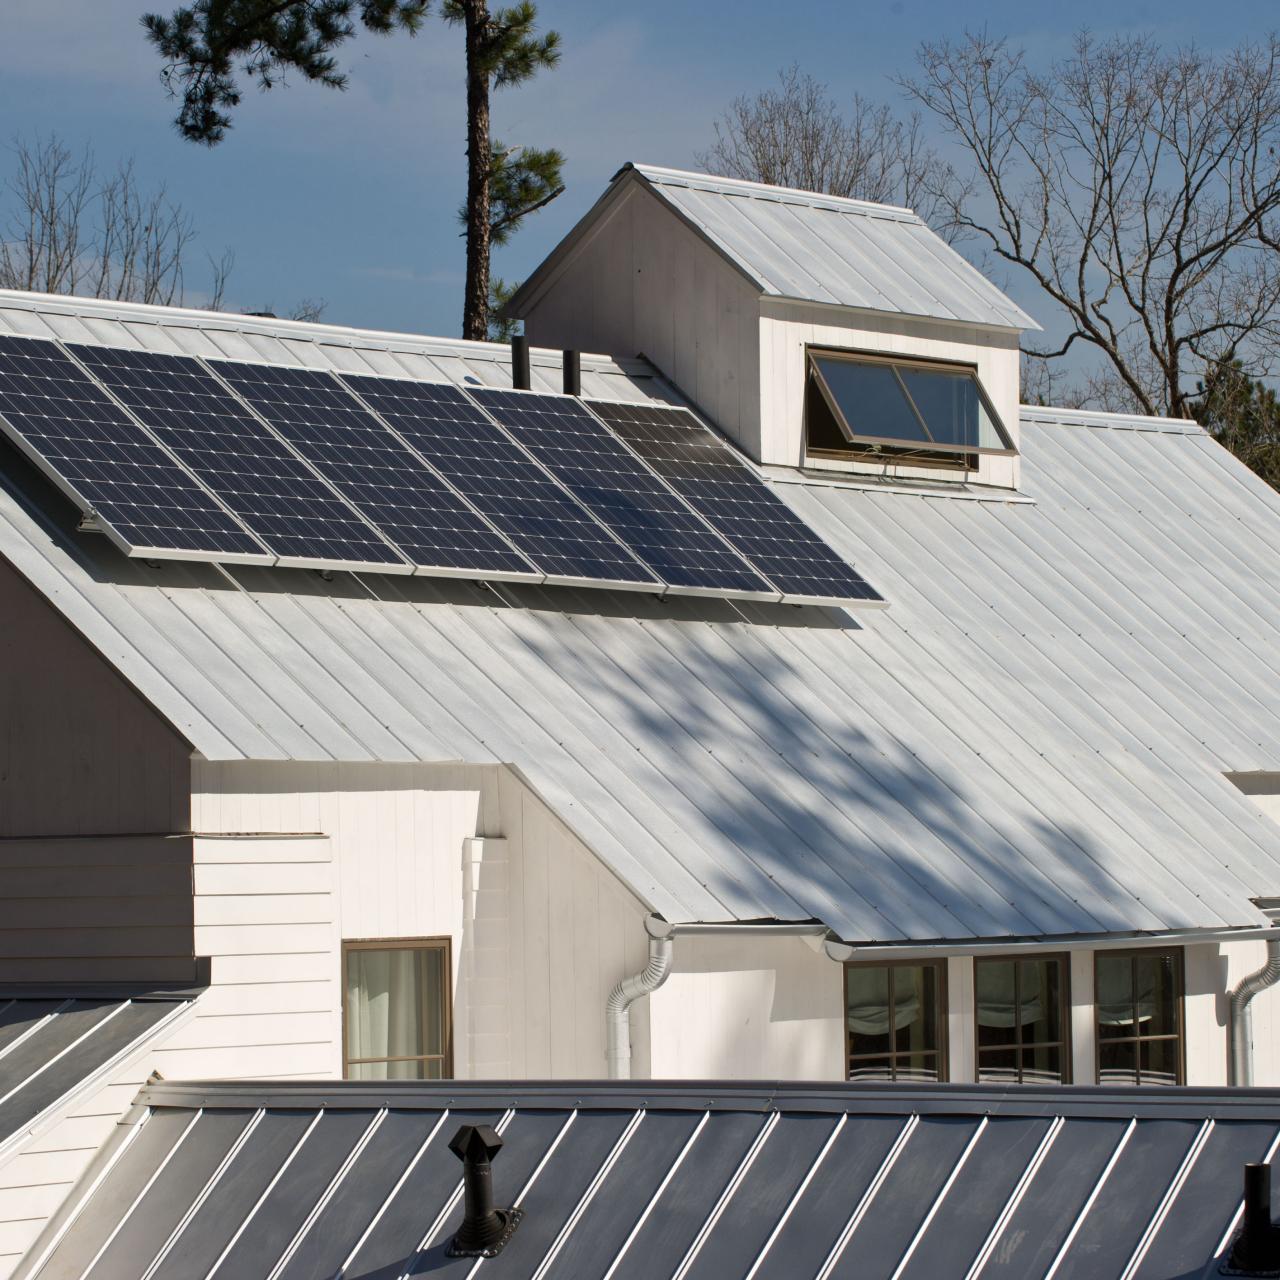 cheap solar systems for house